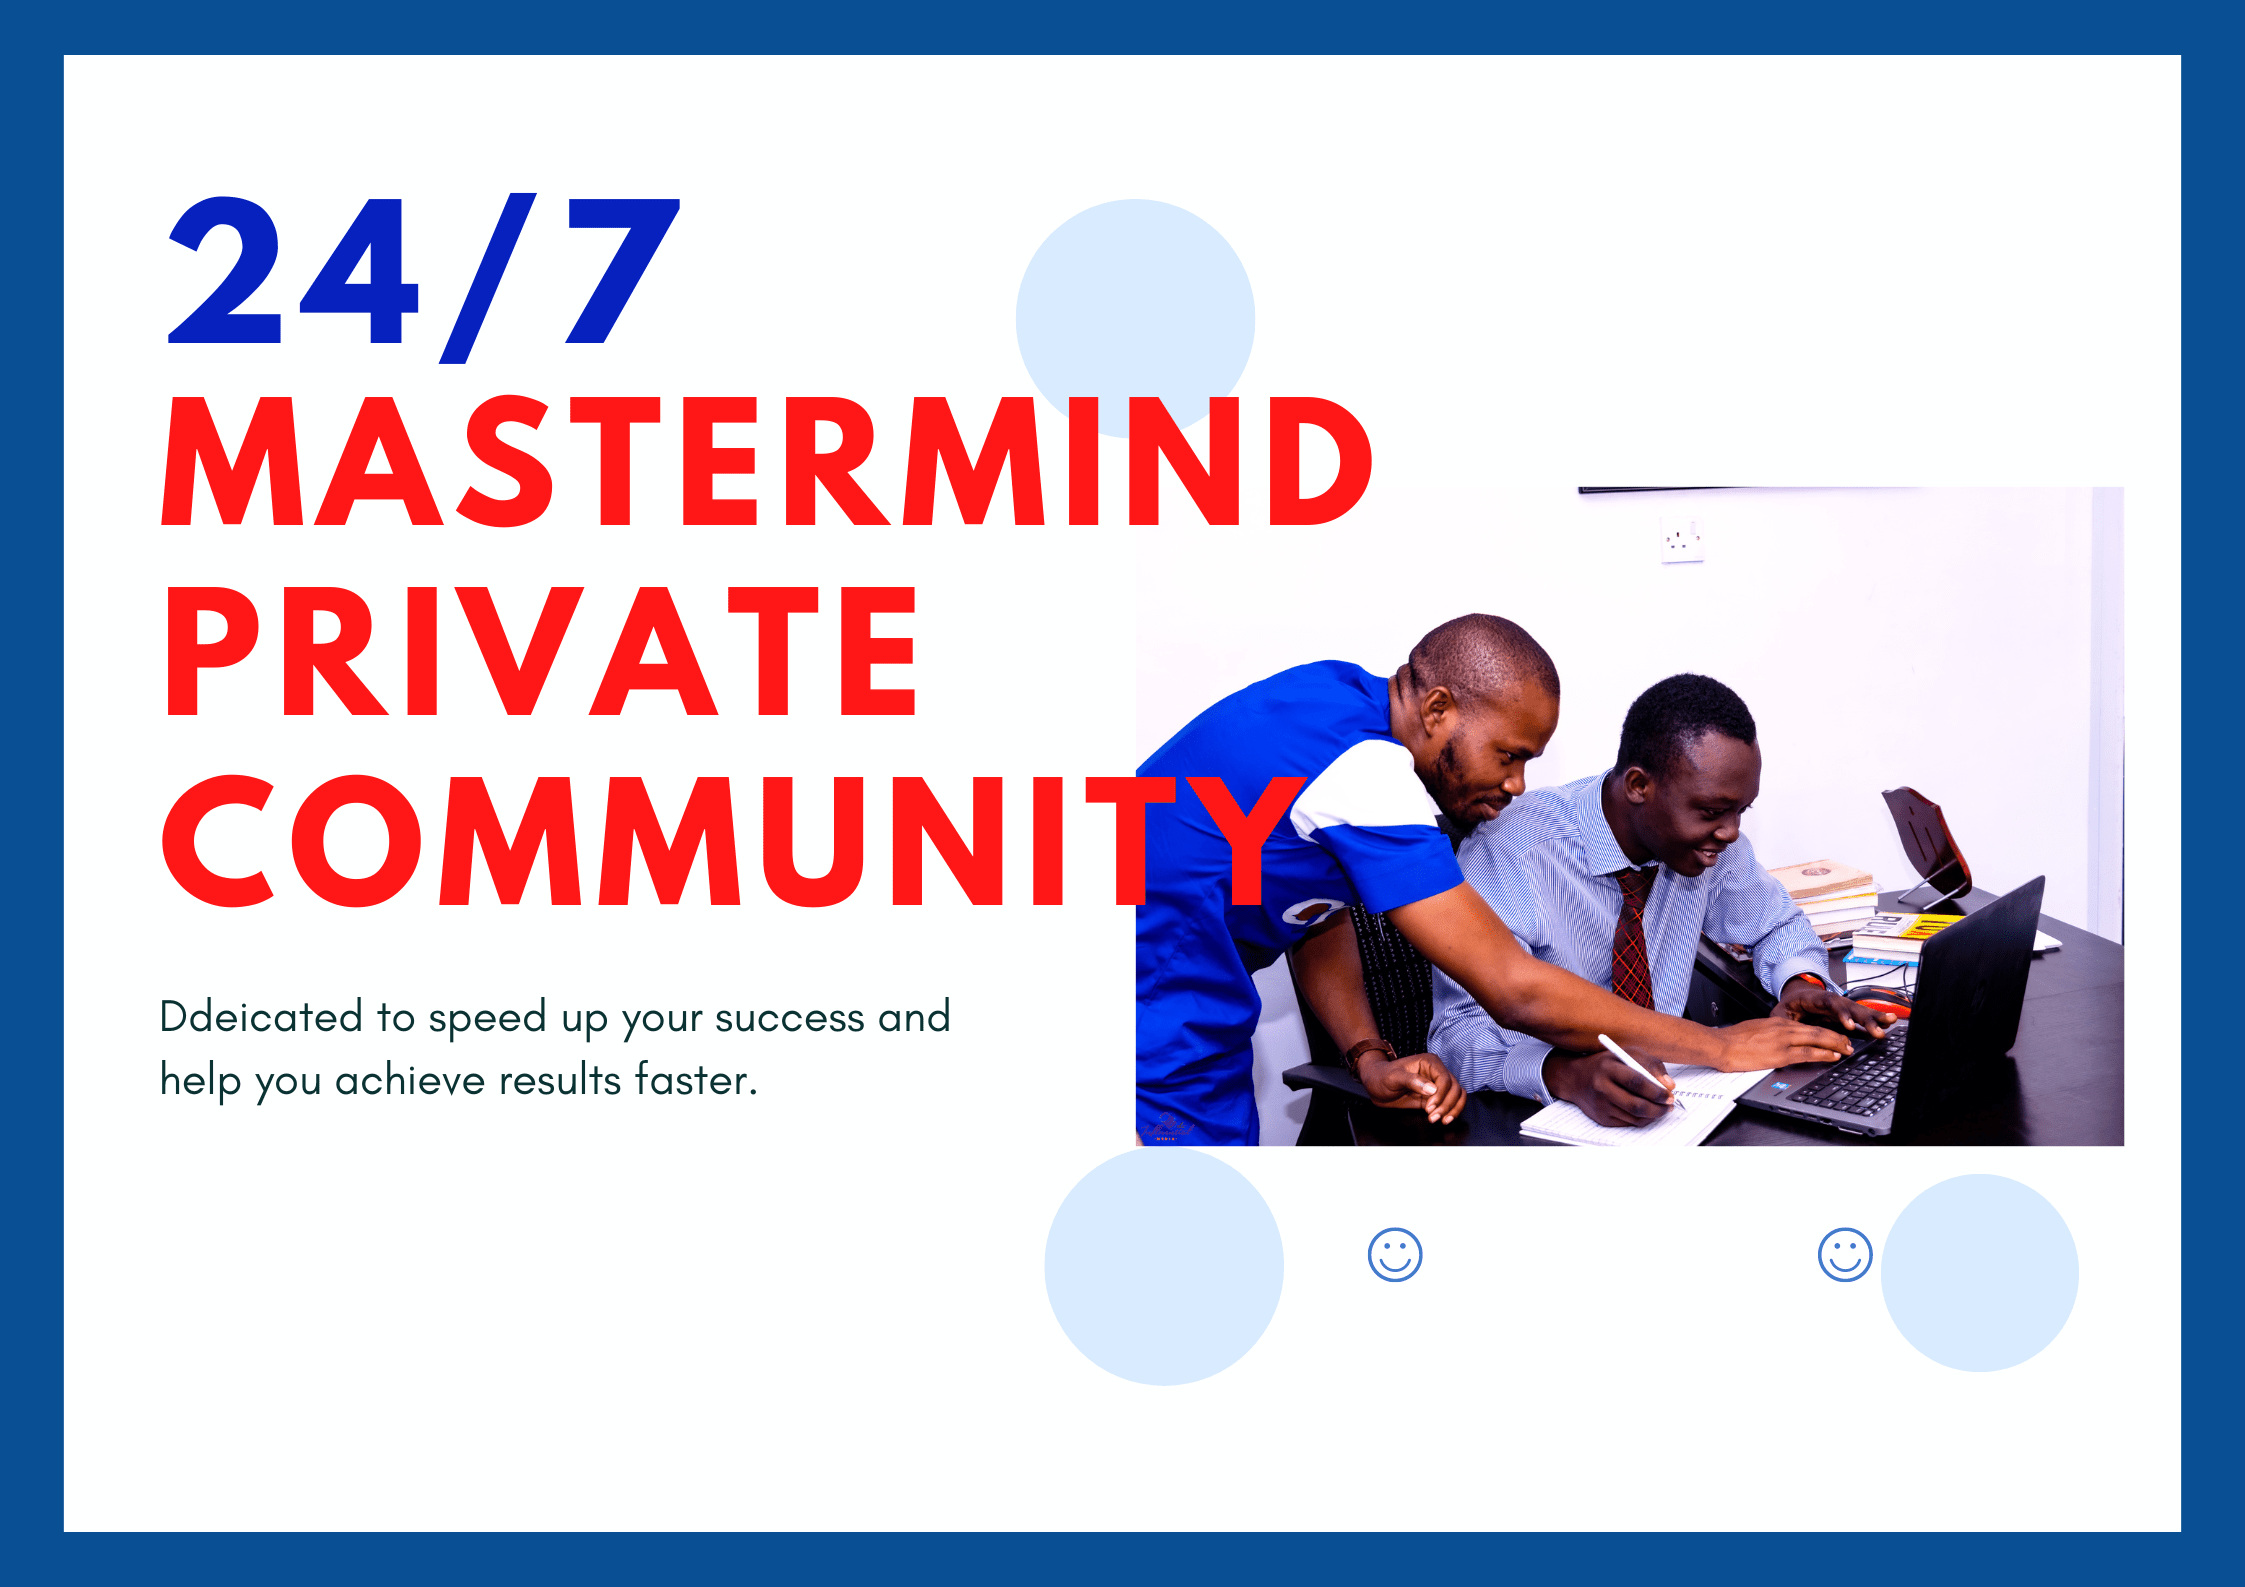 Mastermind Private community